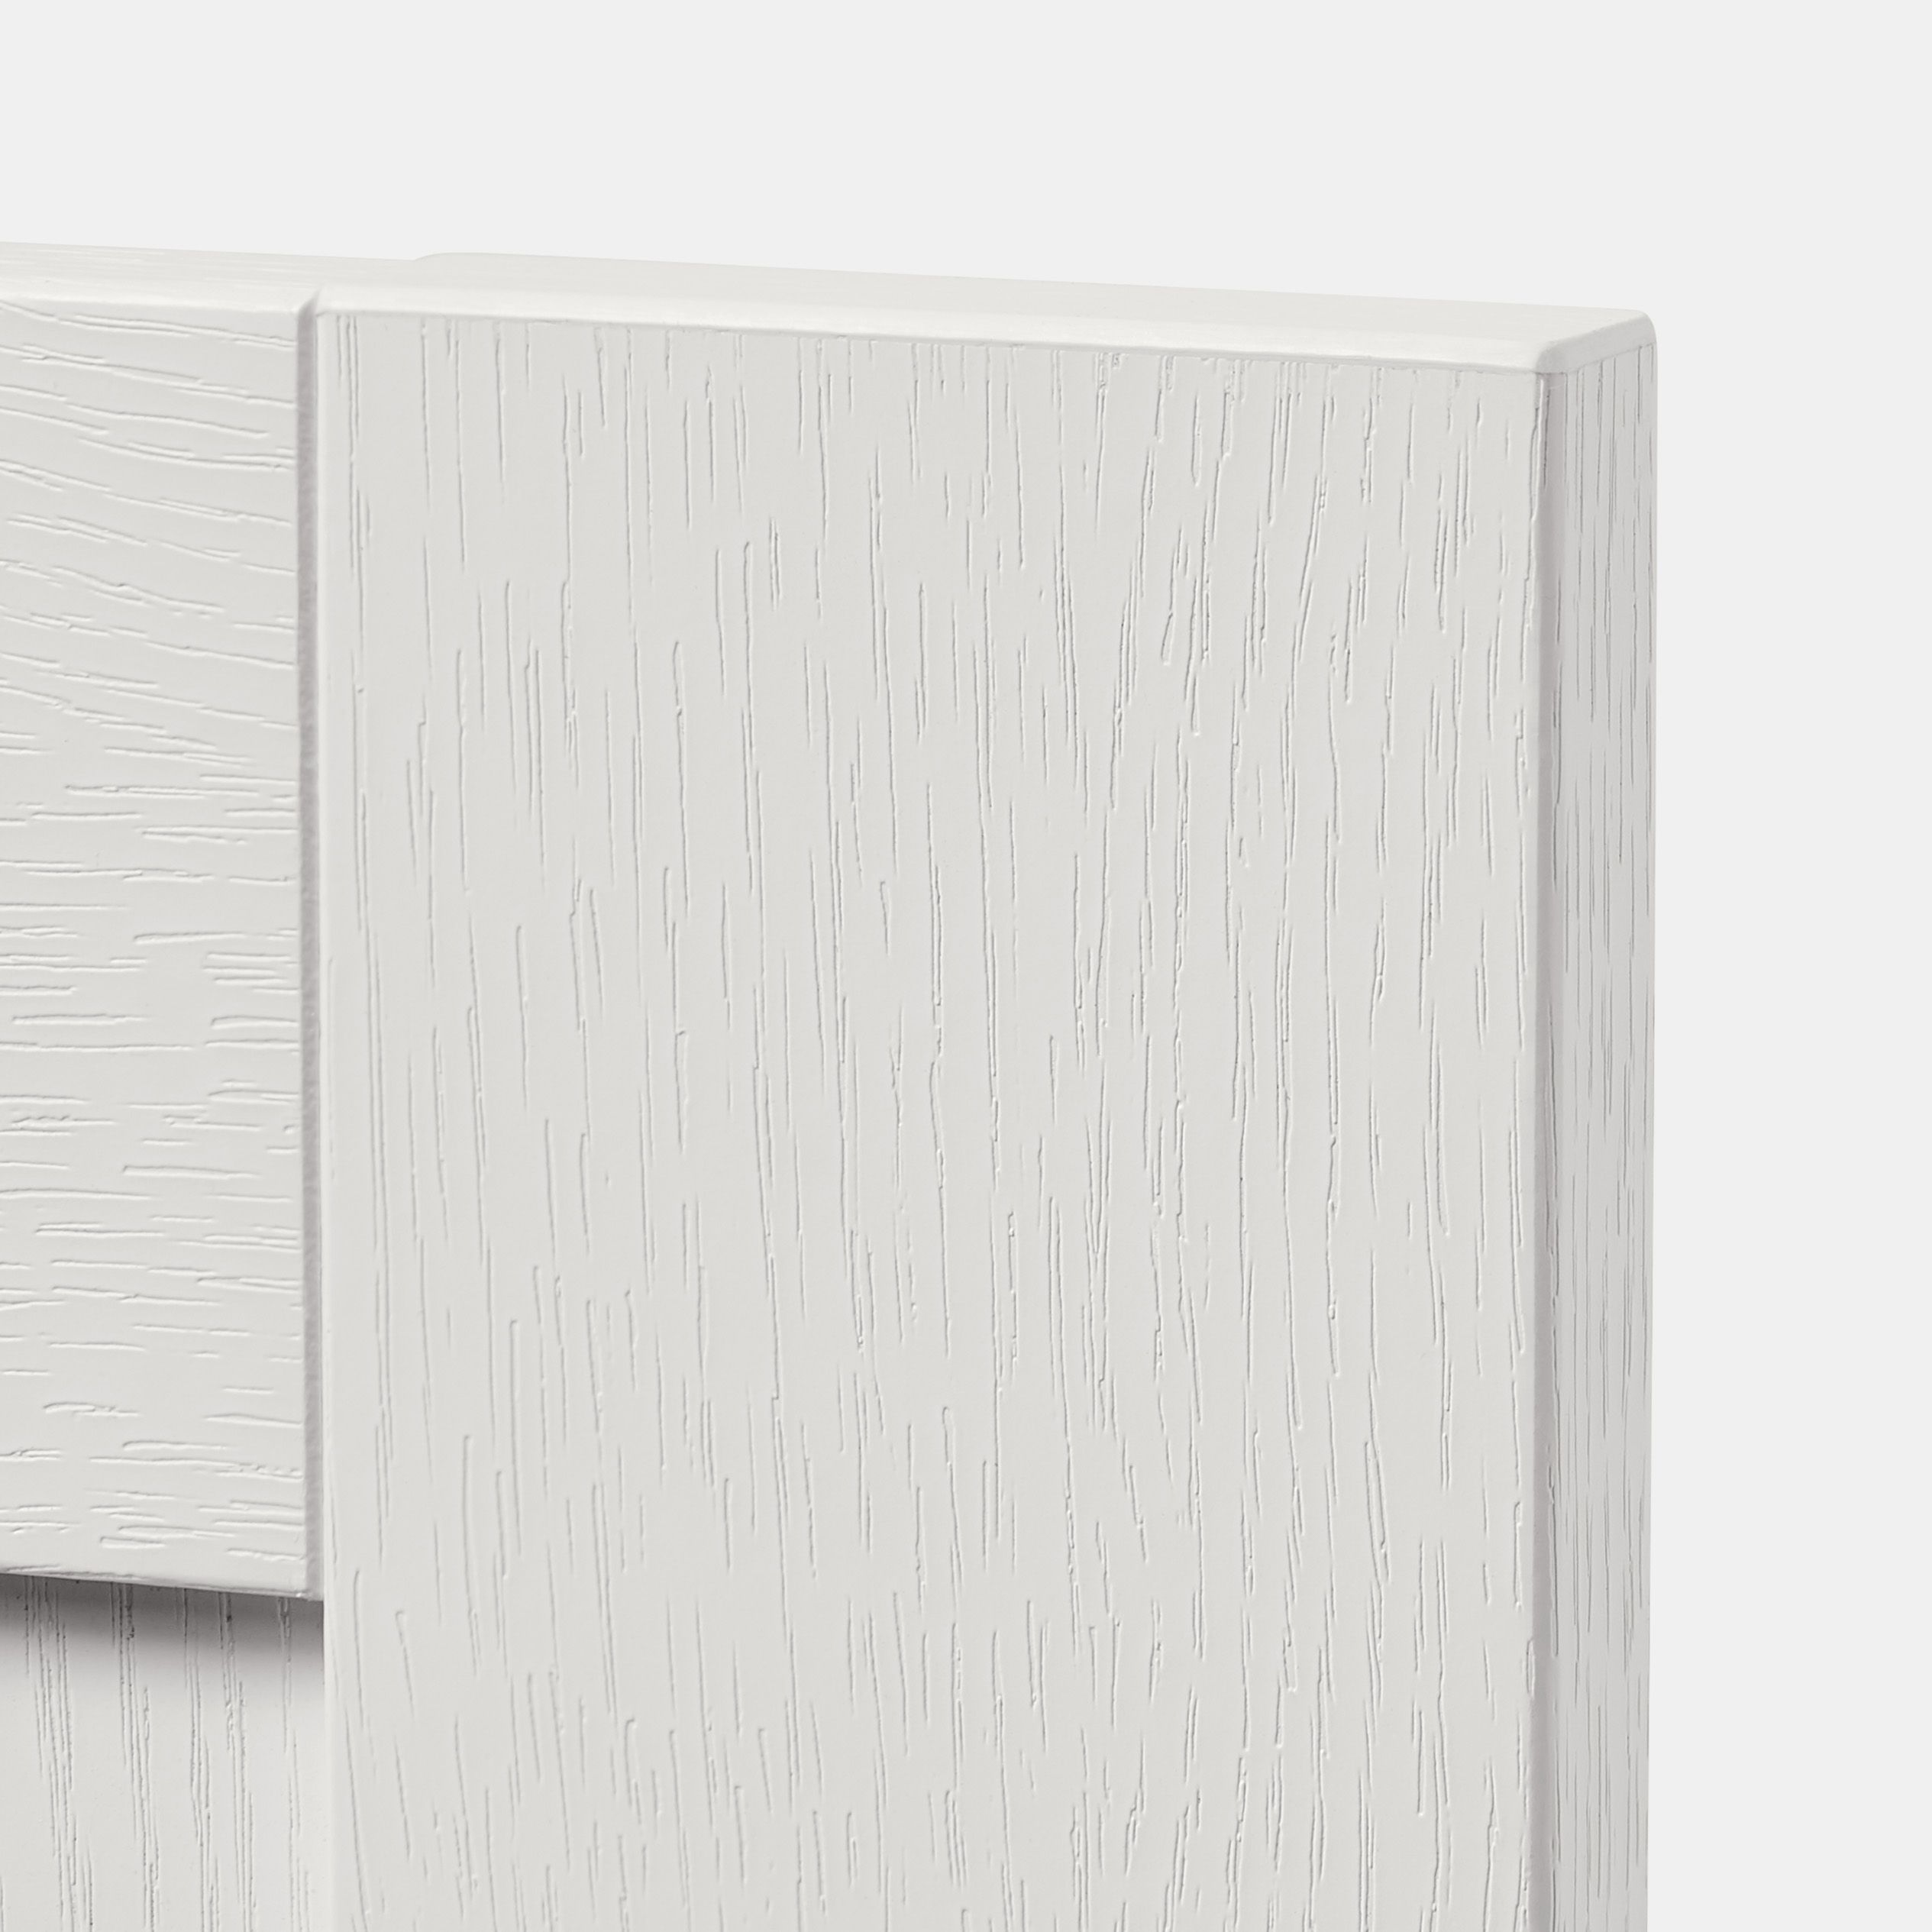 GoodHome Alpinia Matt Ivory Shaker Highline Cabinet door (W)450mm (H)715mm (T)18mm